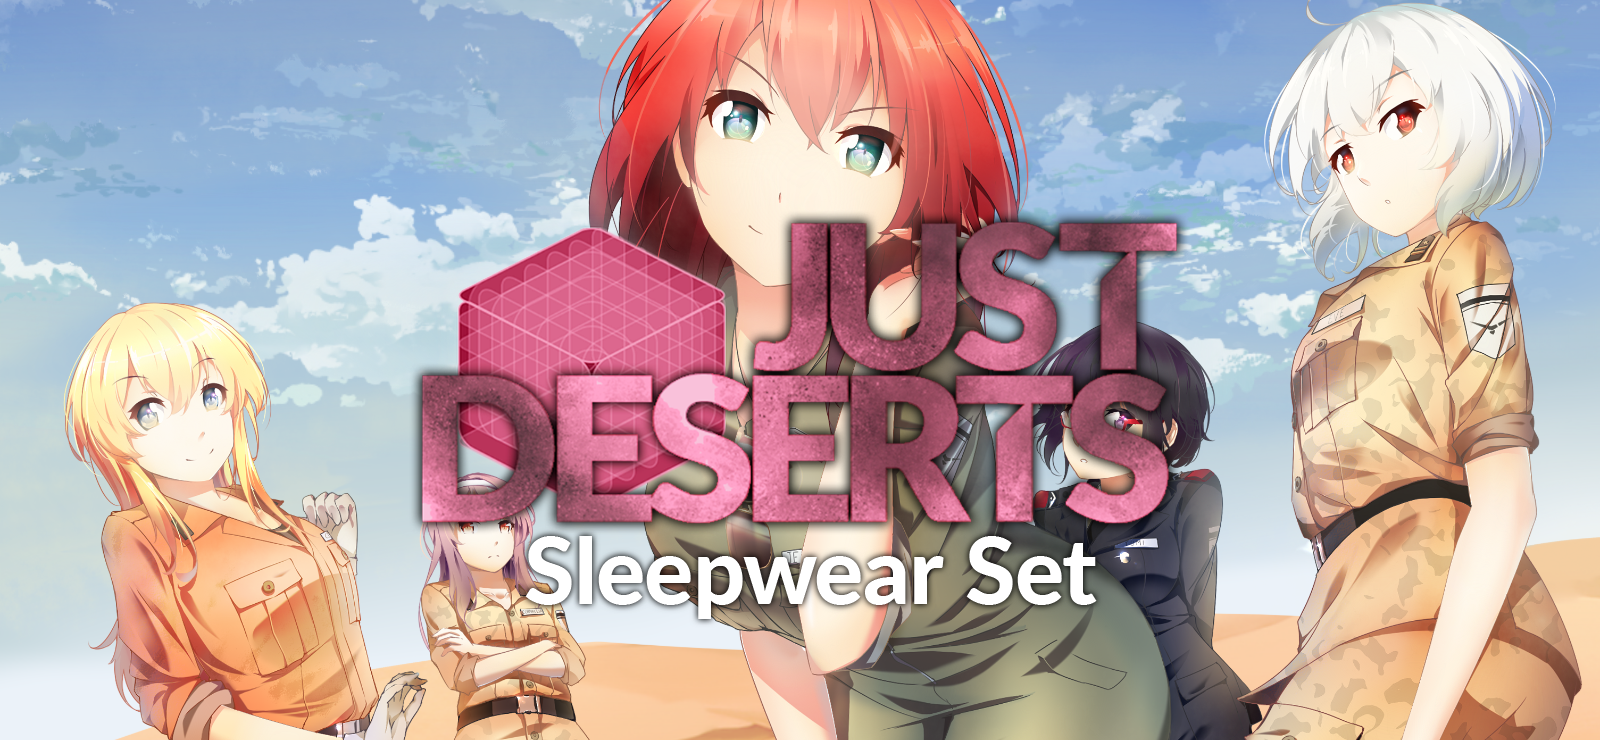 Just Deserts: Sleepwear Costume Set